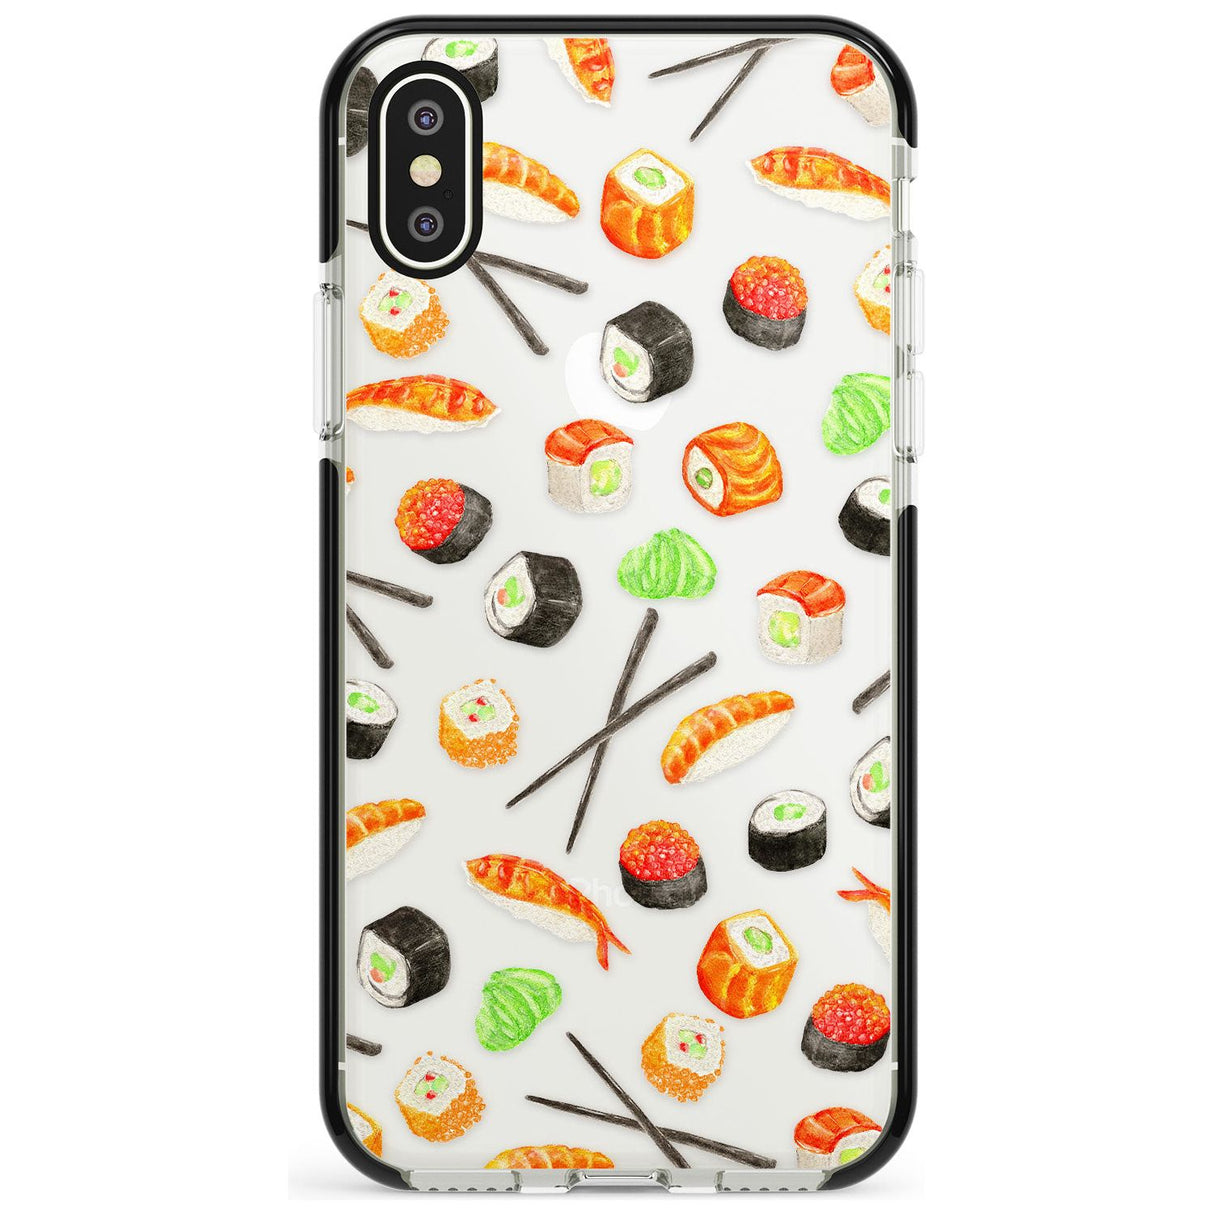 Sushi & Chopsticks Watercolour Pattern Black Impact Phone Case for iPhone X XS Max XR